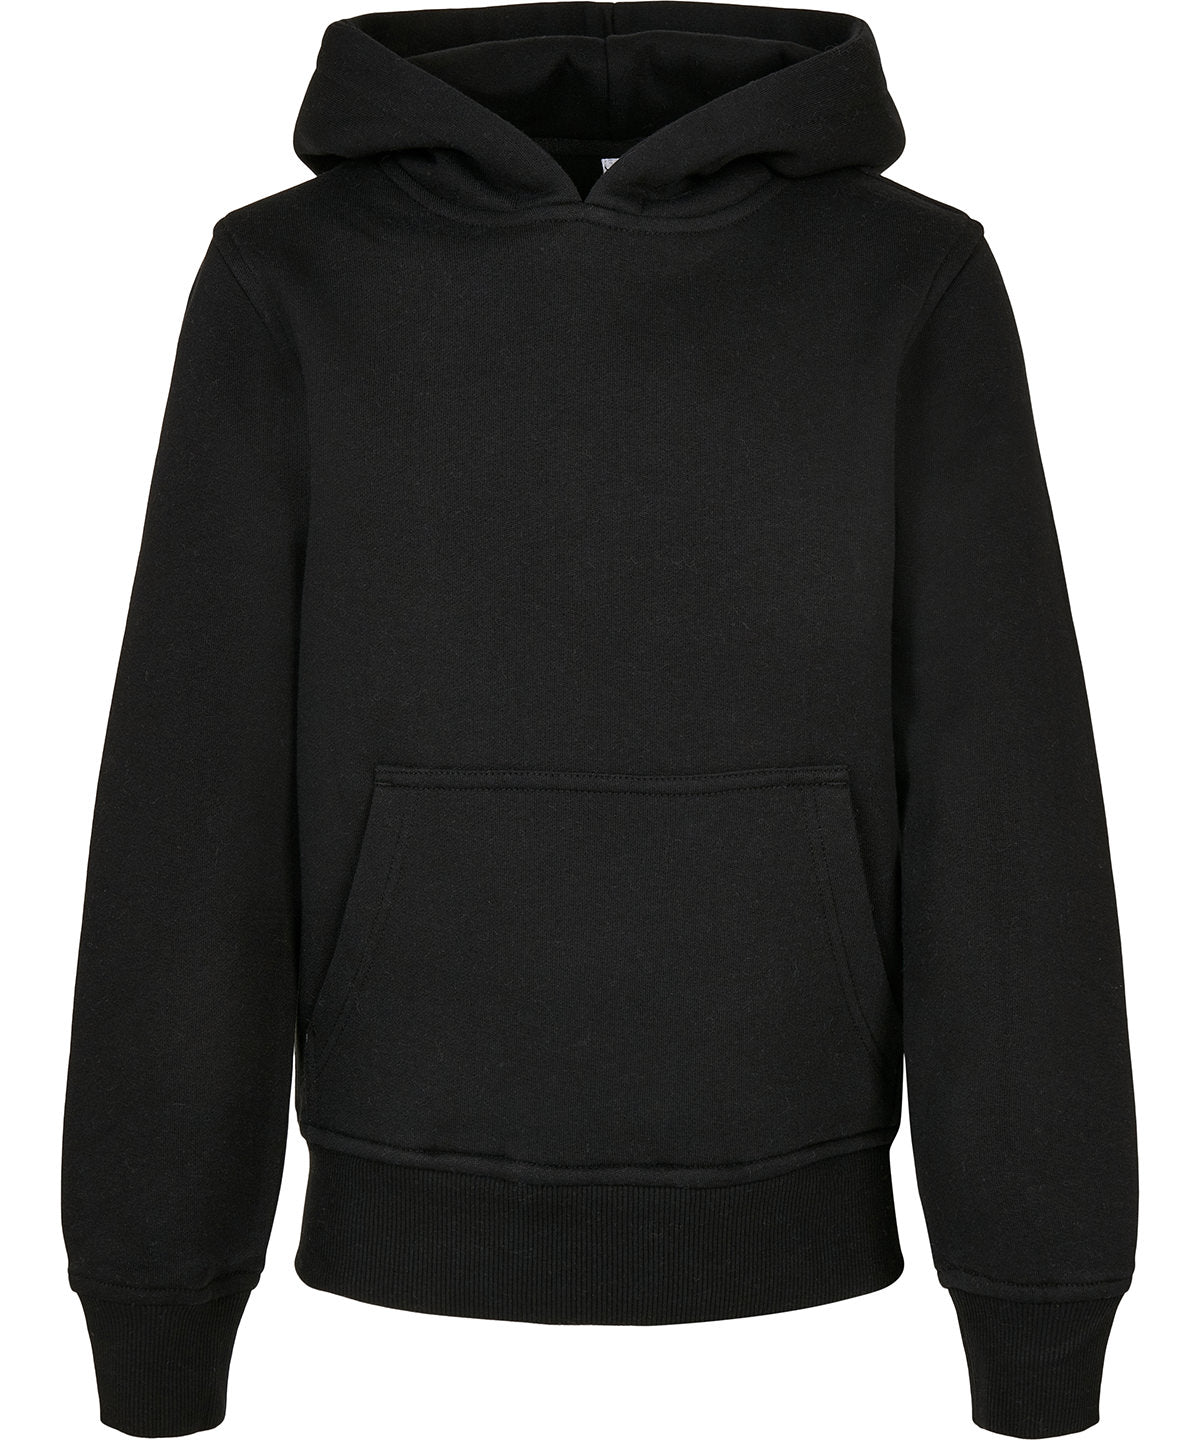 Organic kids basic hoodie | Black